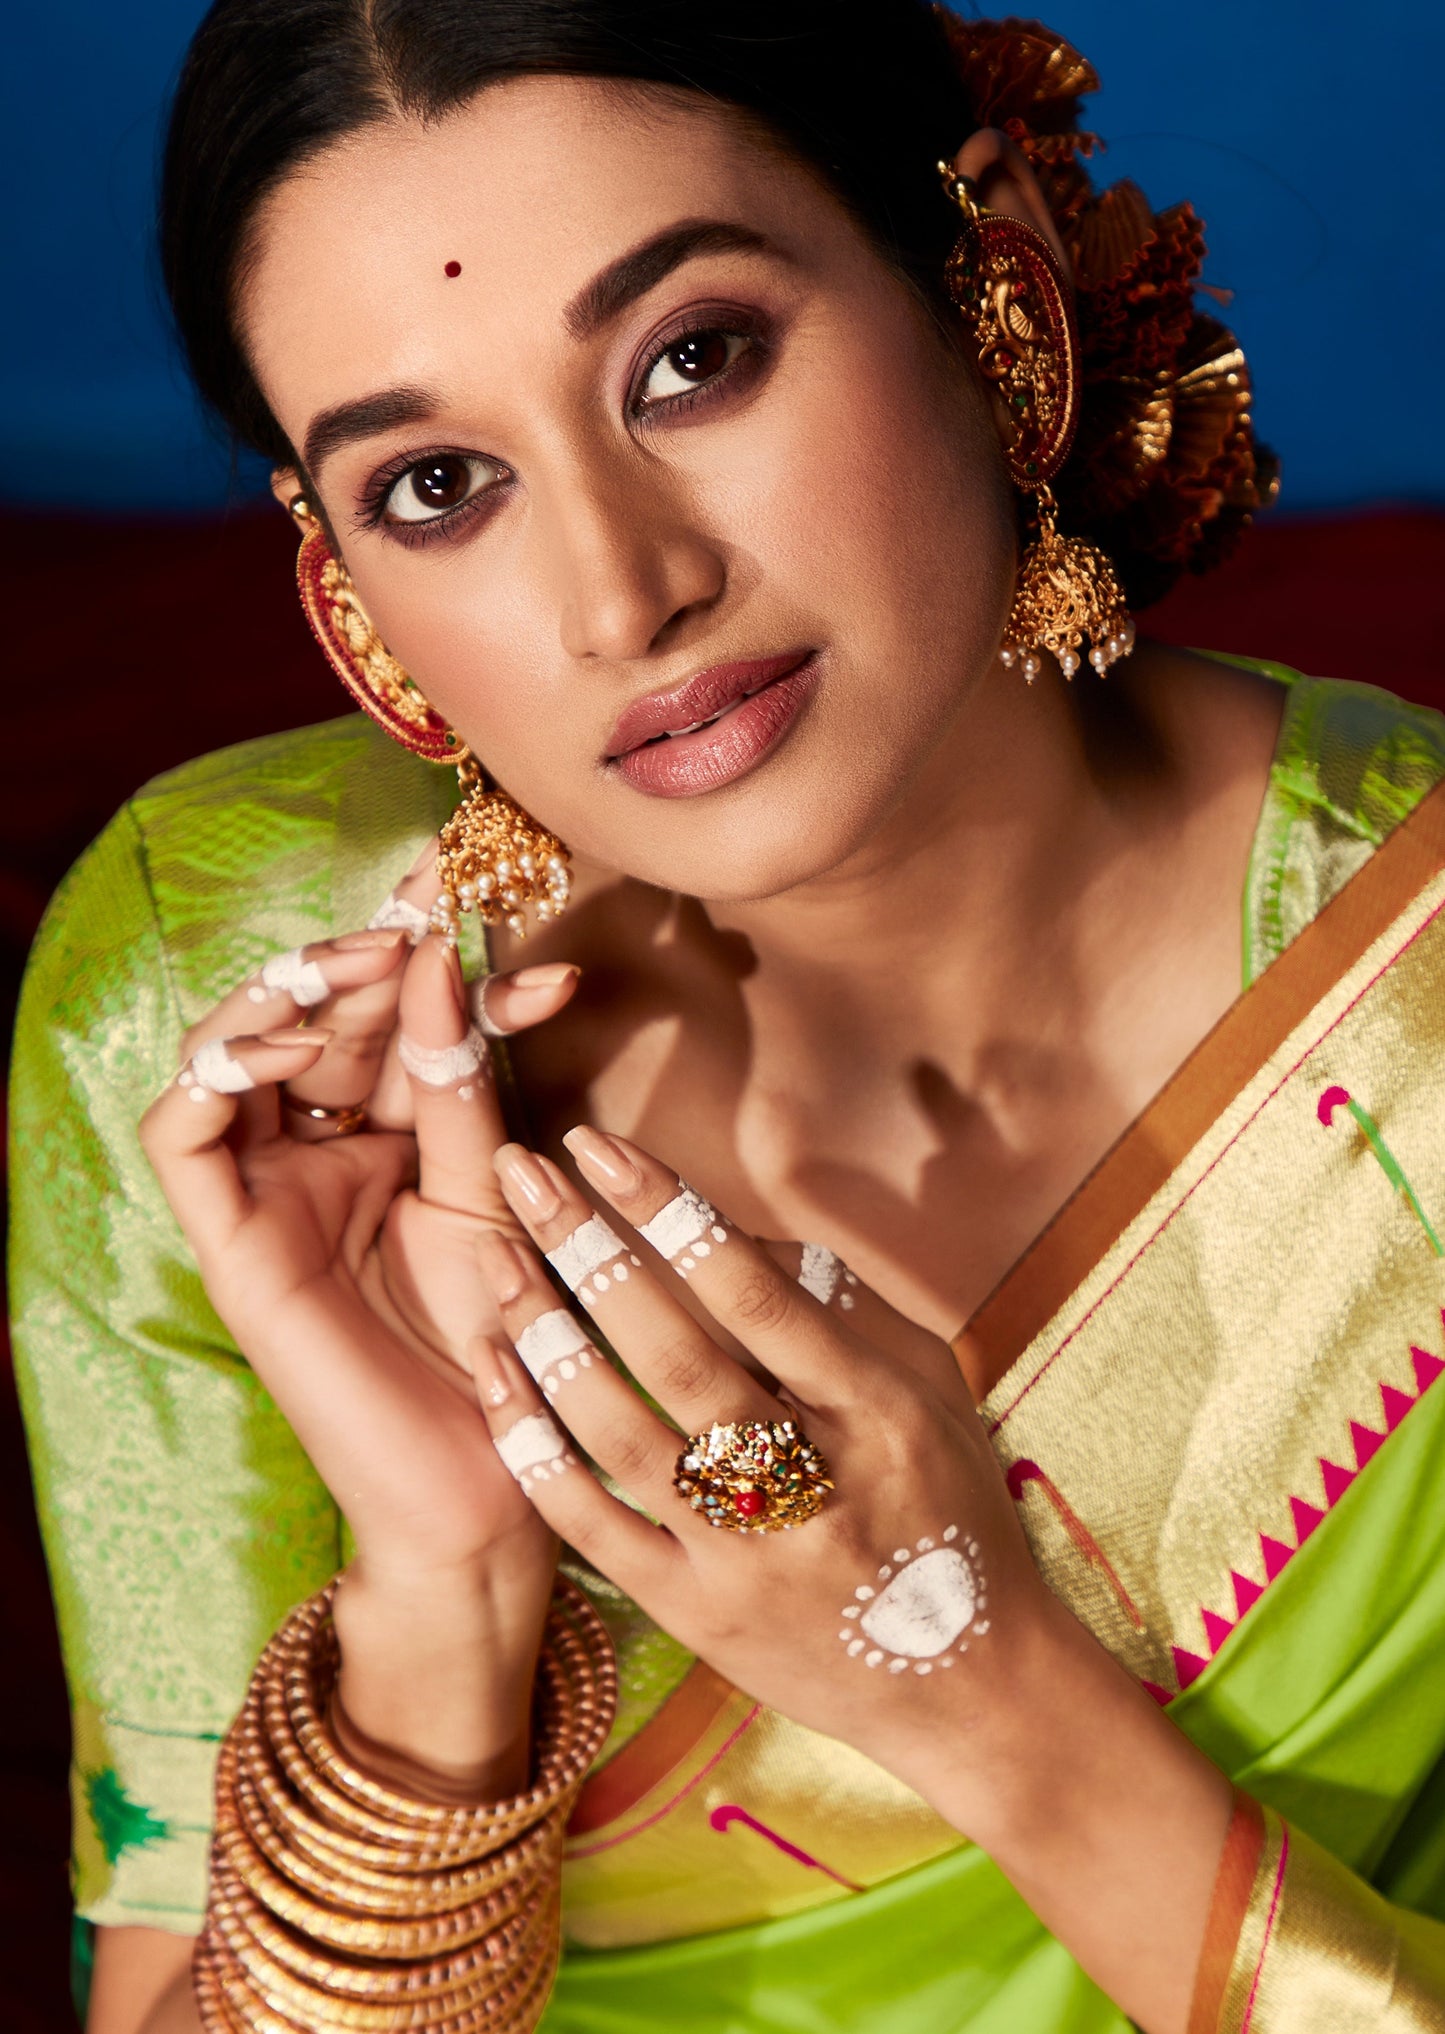 Beautiful Indian woman's face